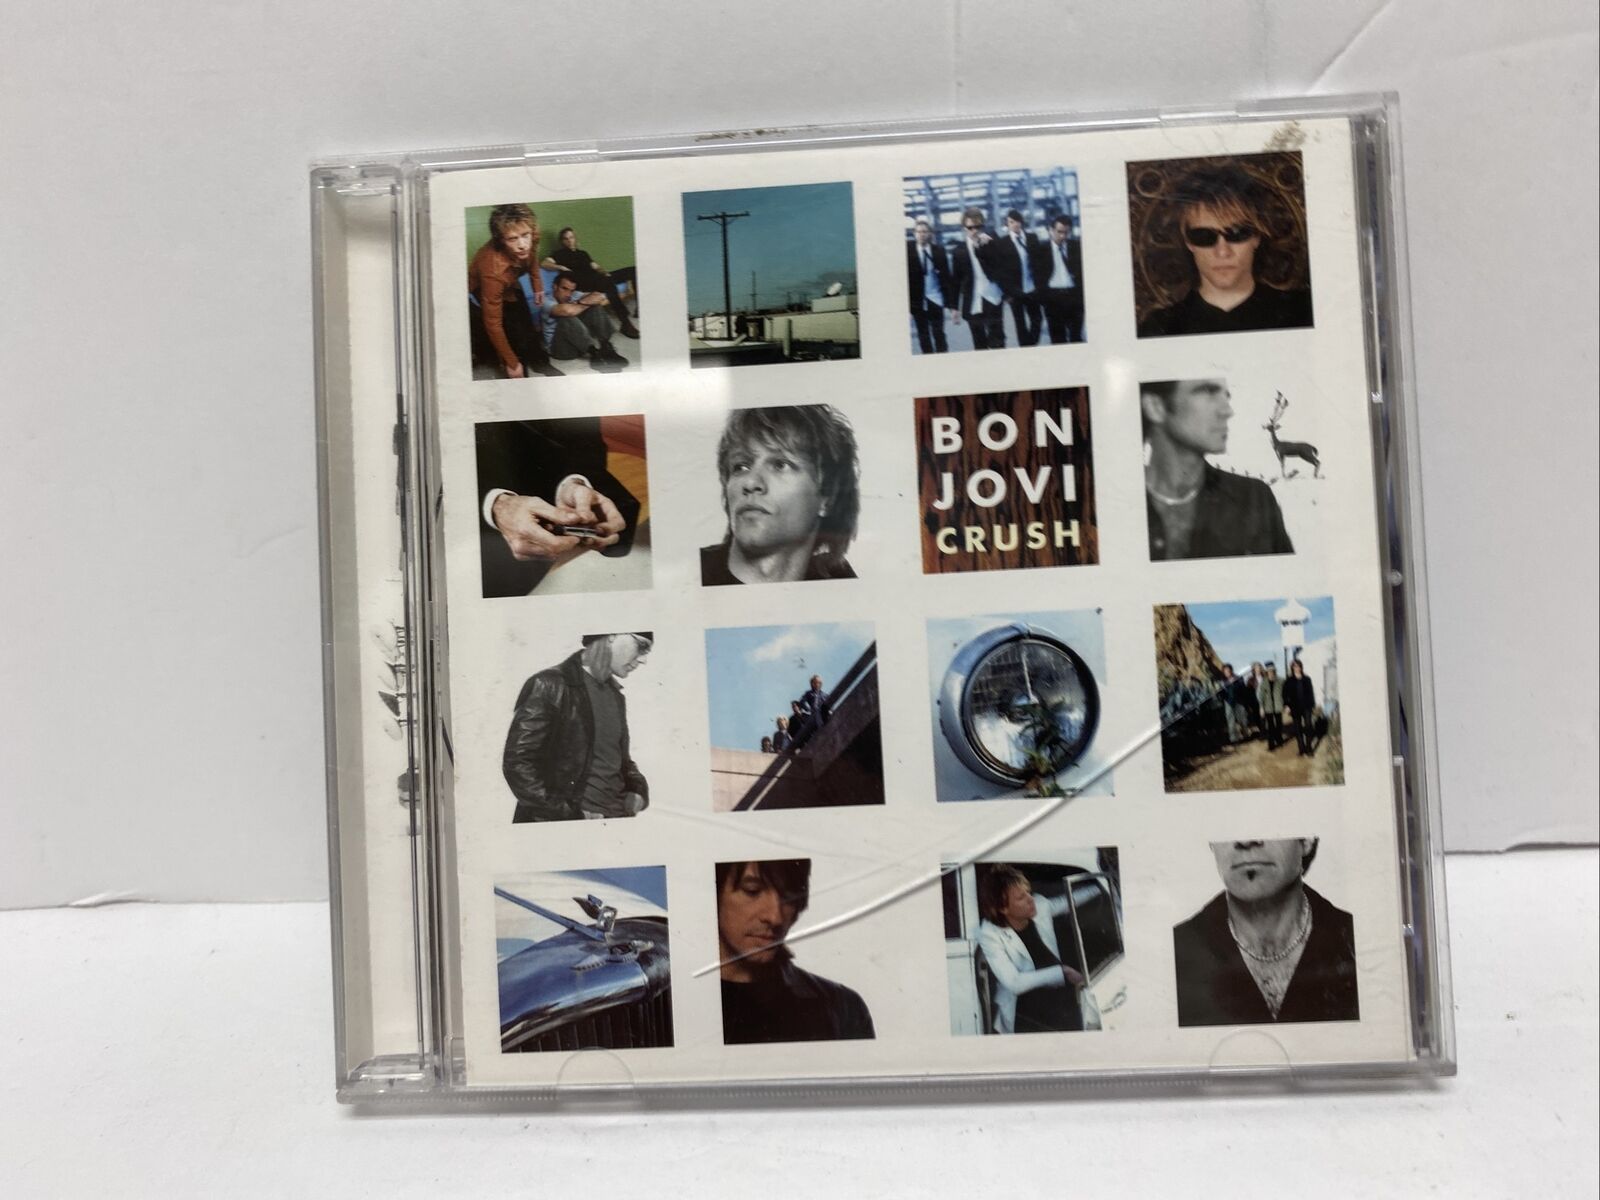 Bon Jovi CD Crush It's My Life One Wild Night She's A Myster